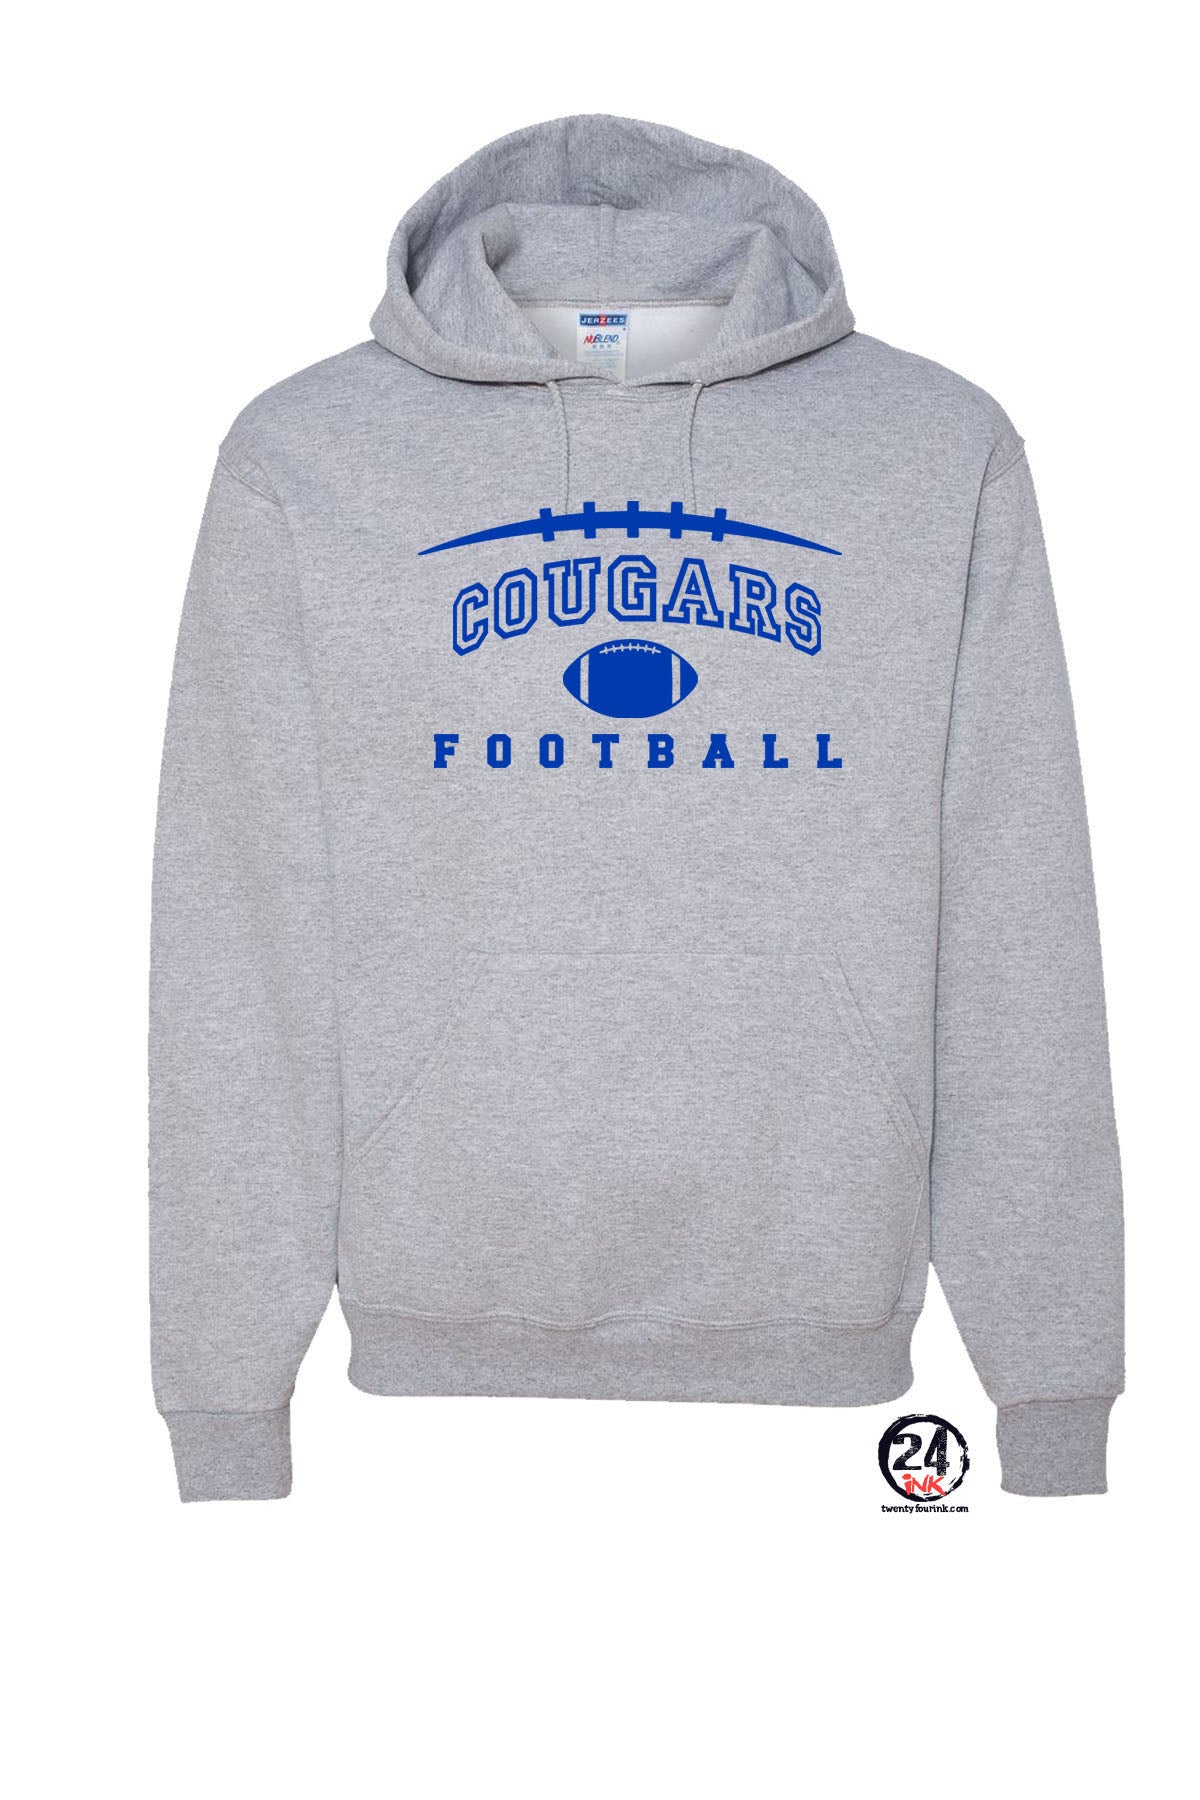 Kittatinny Football Design 3 Hooded Sweatshirt